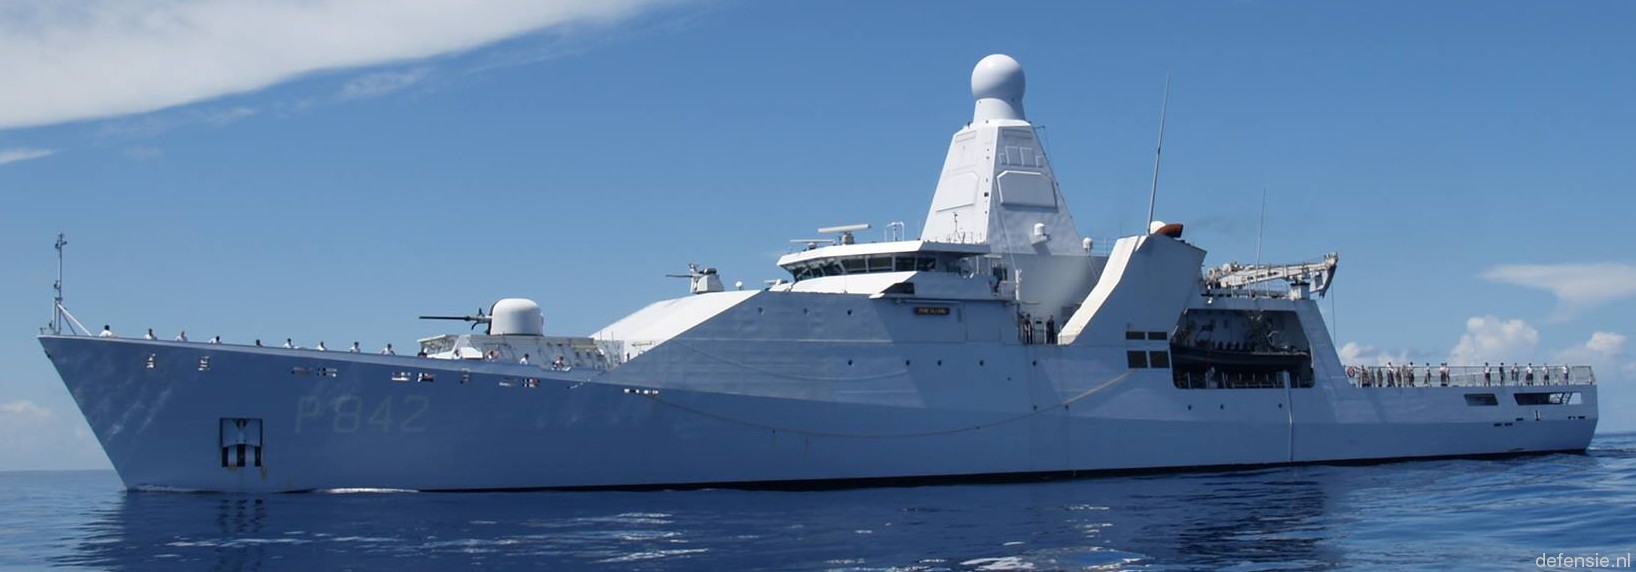 p-842 hnlms friesland holland class offshore patrol vessel opv royal netherlands navy 06